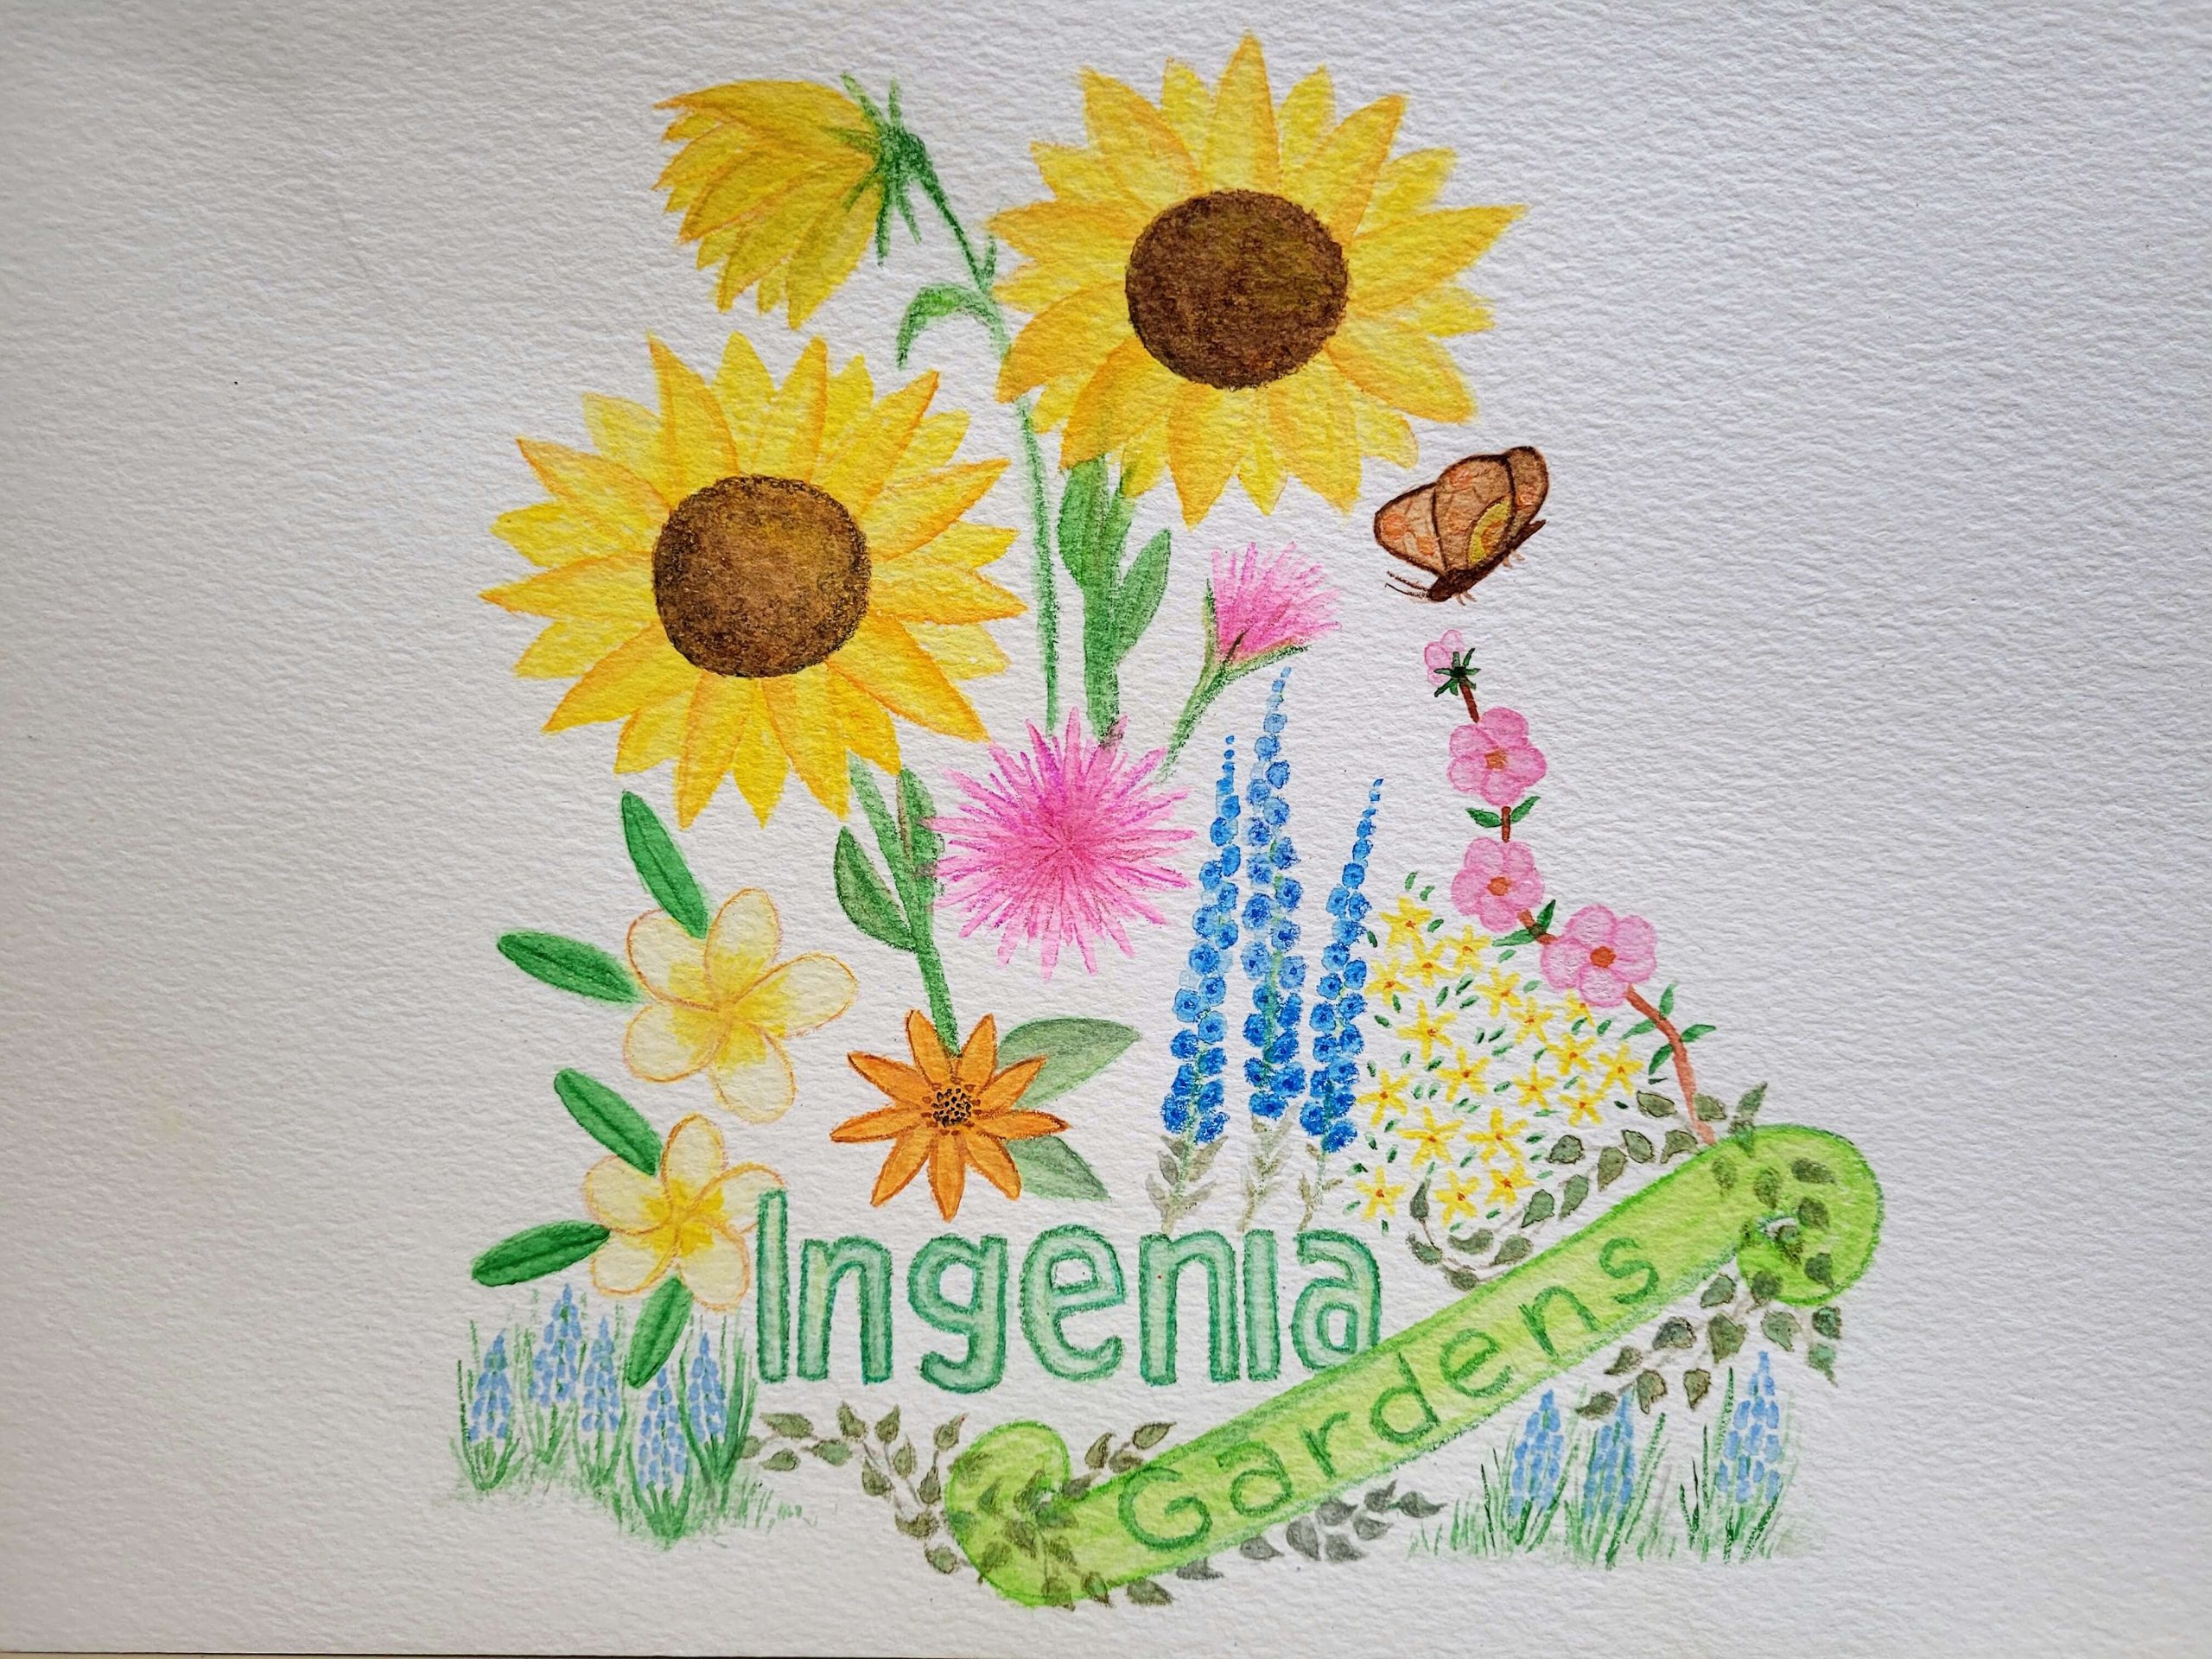 Ingenia Gardens Tea Towel Art Contest - VIC Runner Up